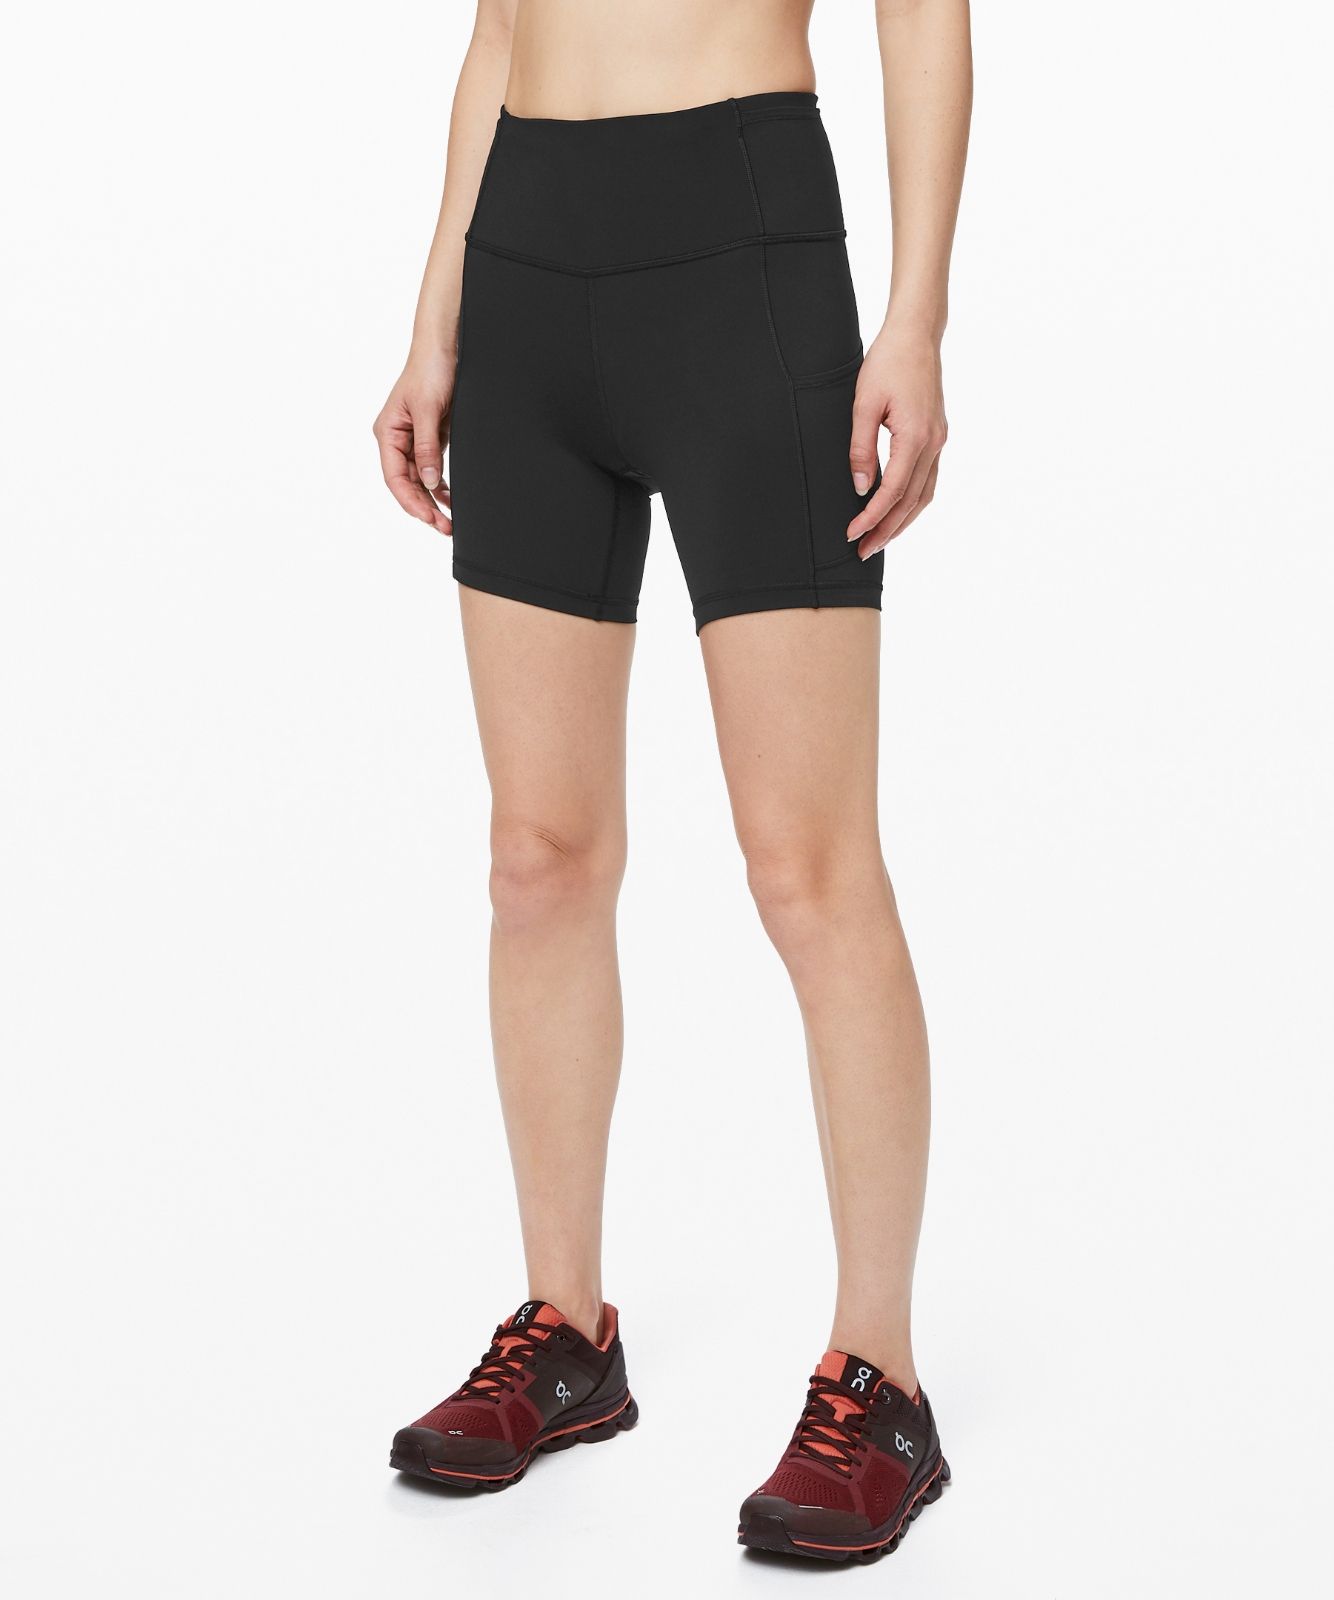 running shorts with bike shorts under